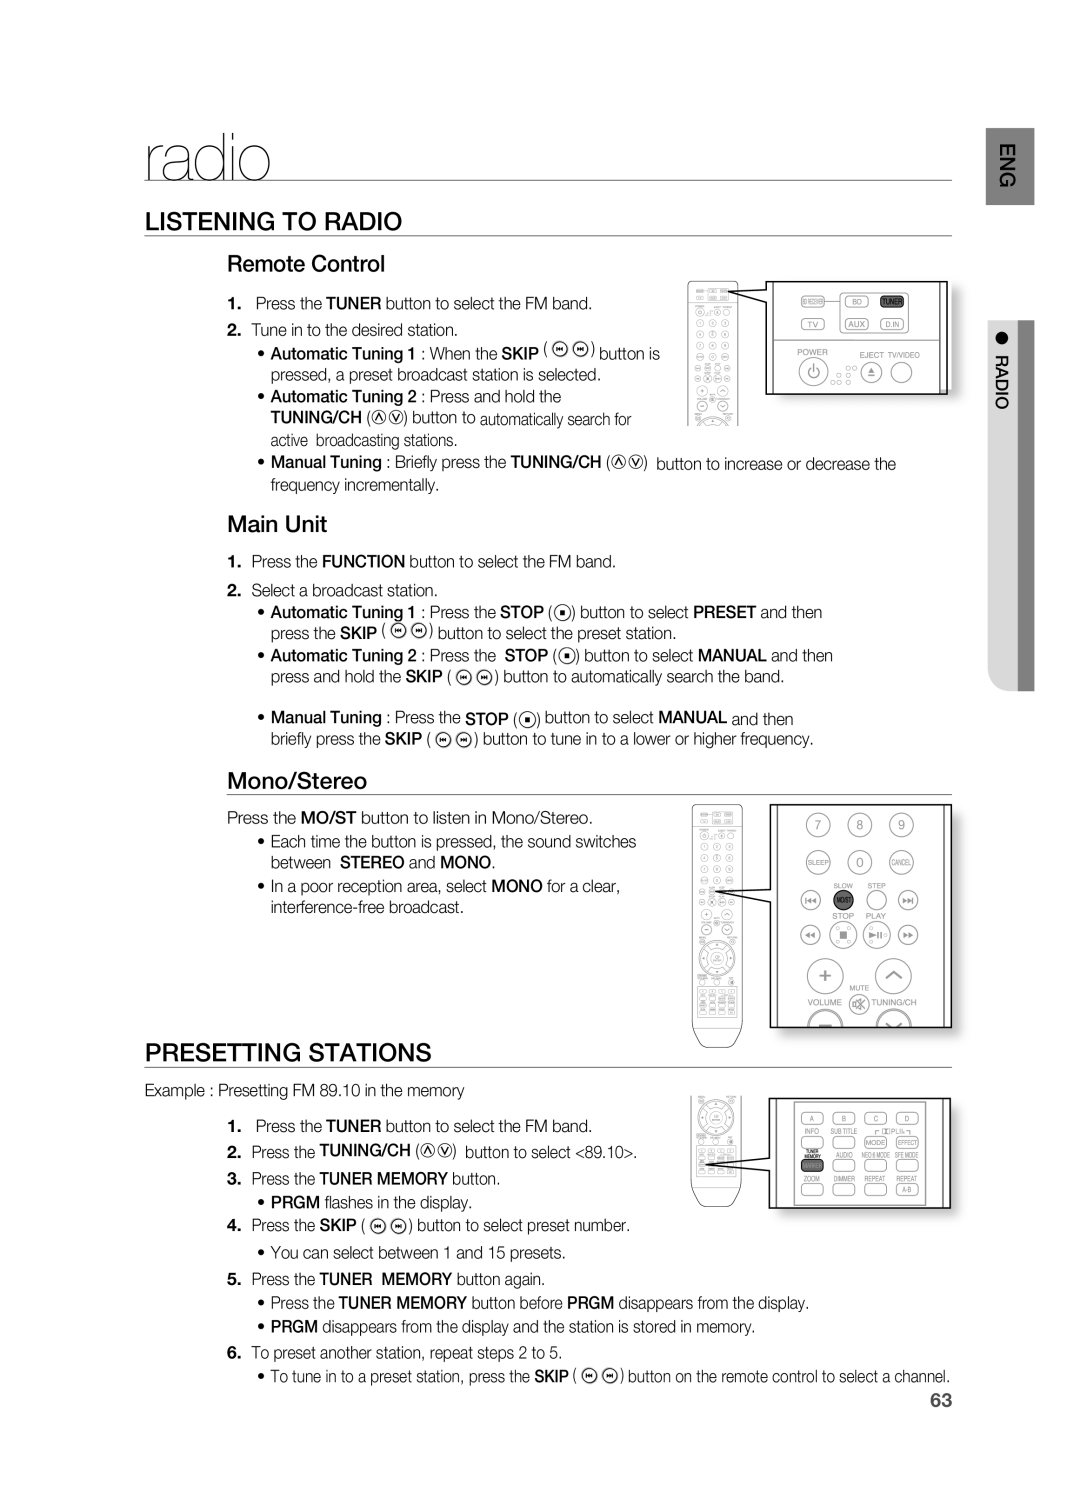 Samsung HT-BD2 manual radio, Listening To Radio, Presetting Stations, Remote Control, Main Unit, Mono/Stereo 